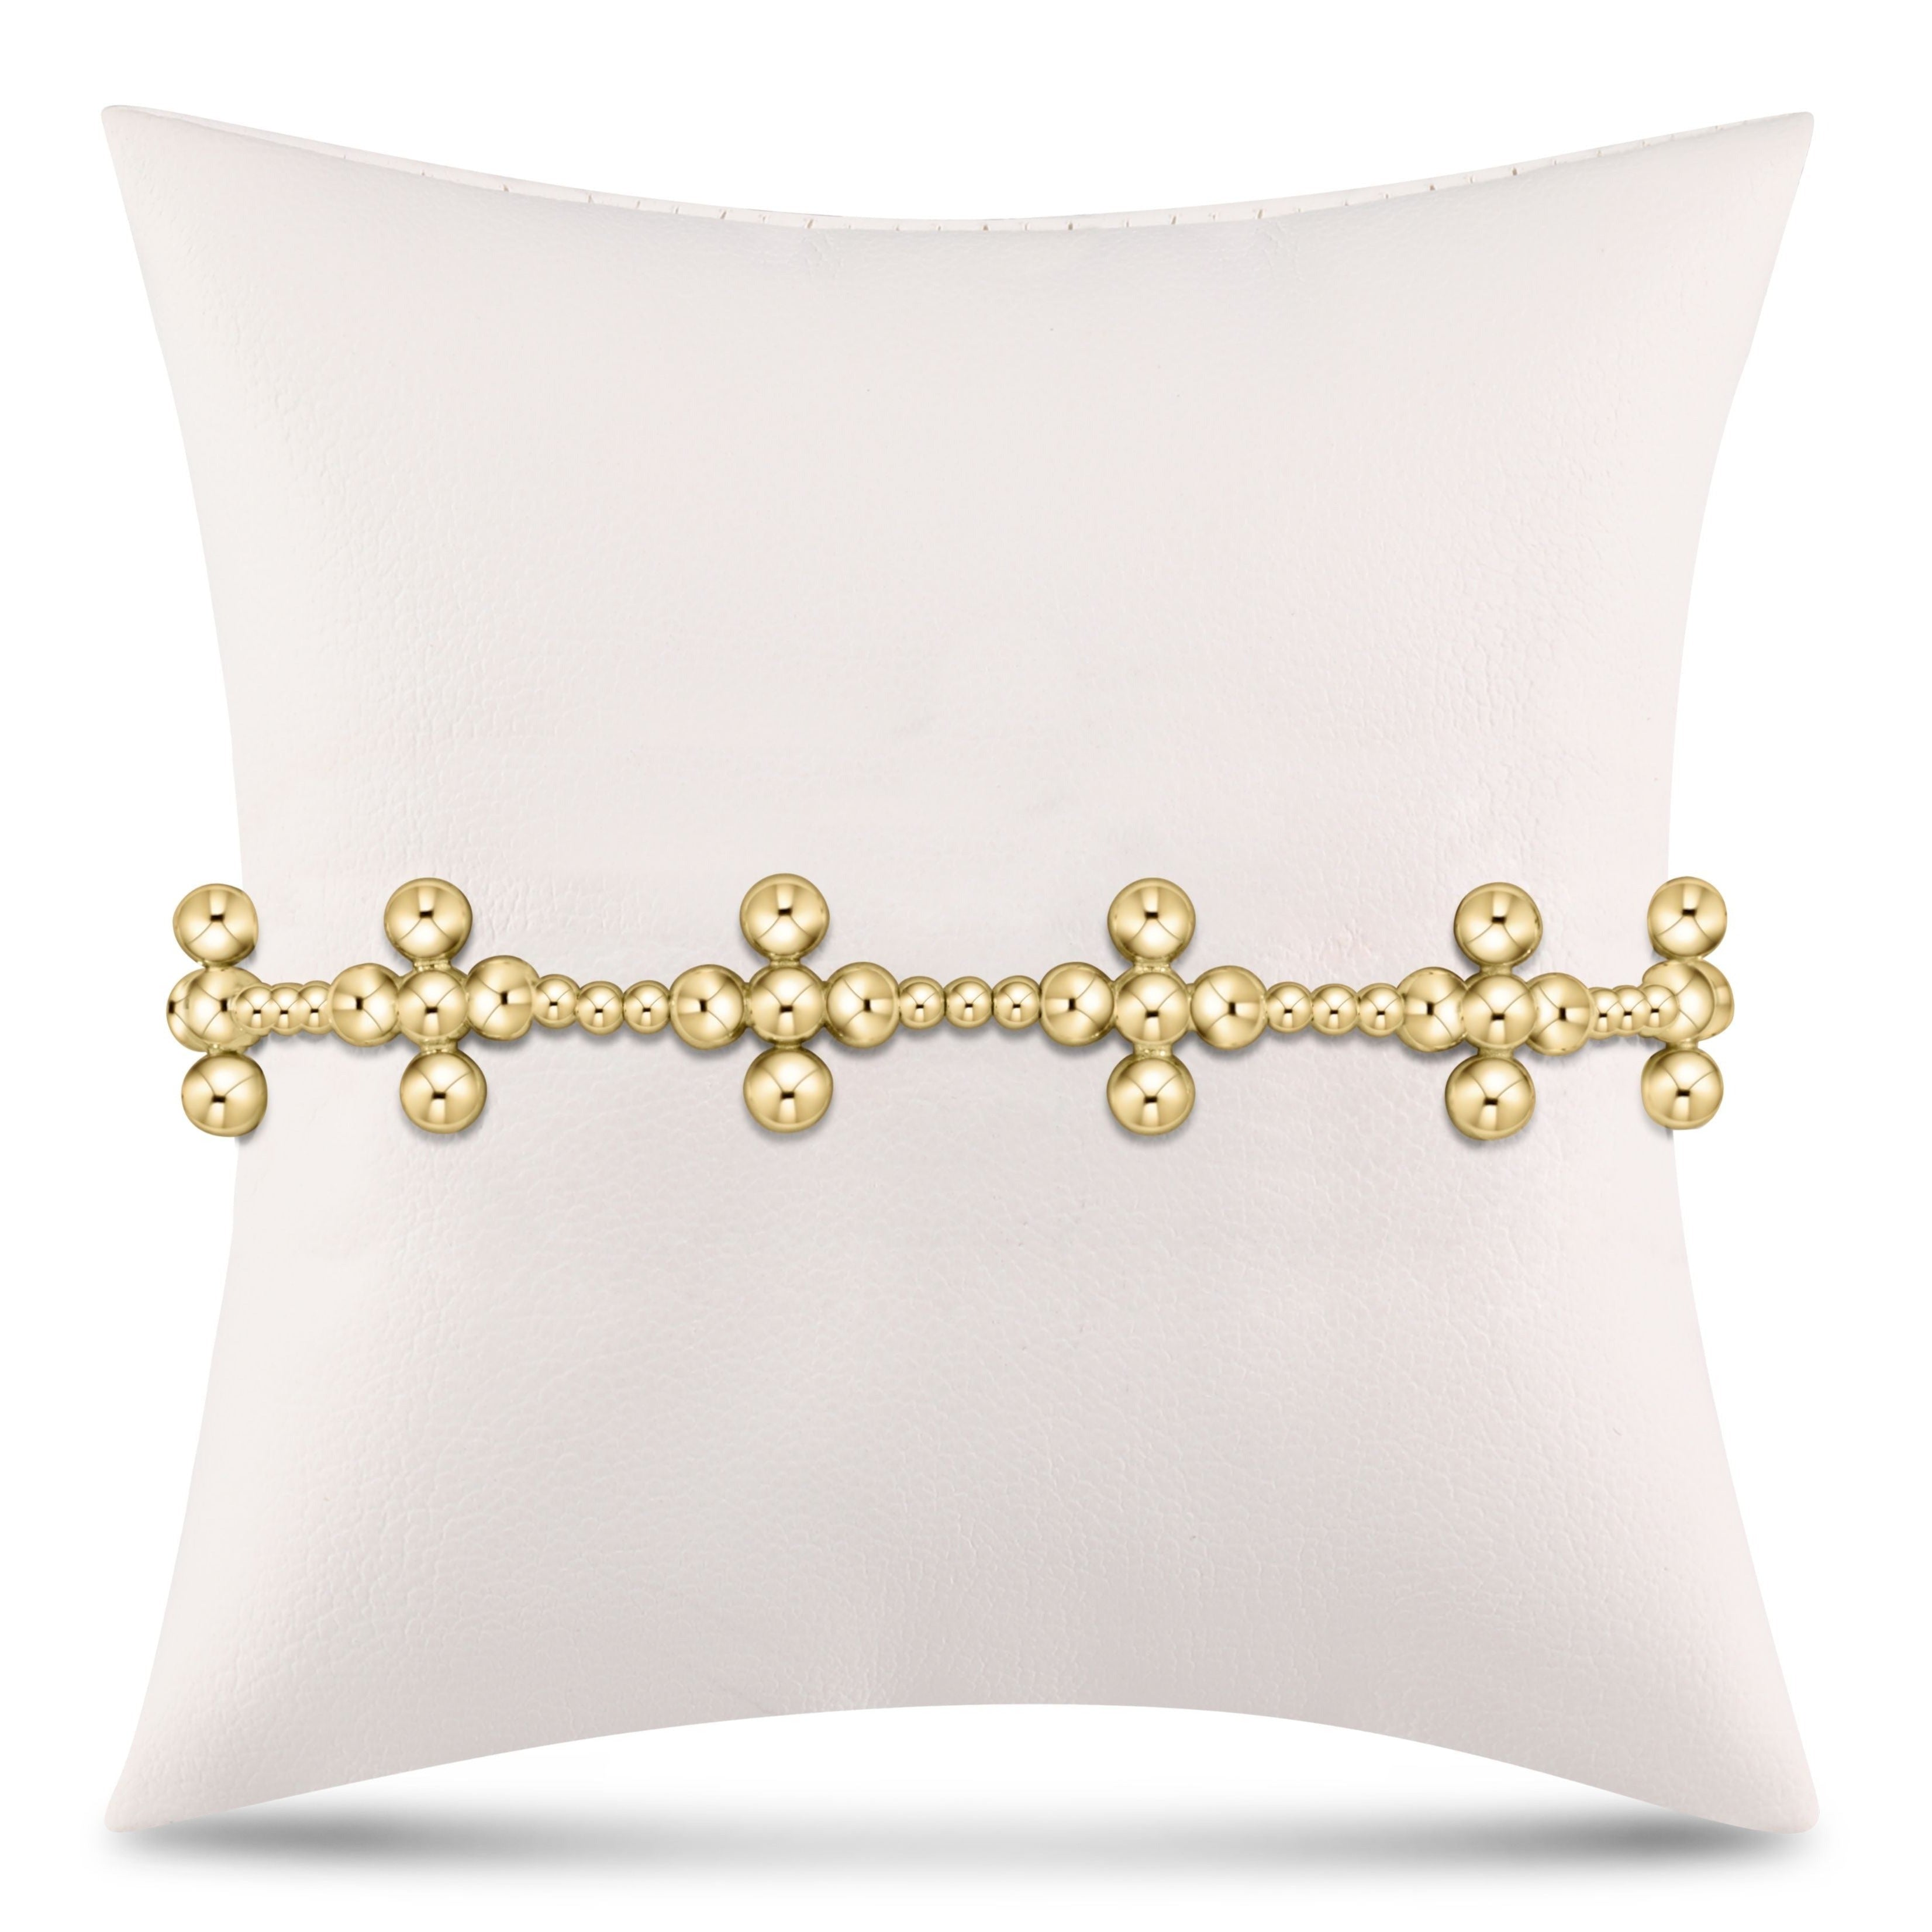 Signature Cross Sincerity Pattern 2.5mm Bead Bracelet - Classic Beaded Signature Cross Gold - 4mm Bead Gold